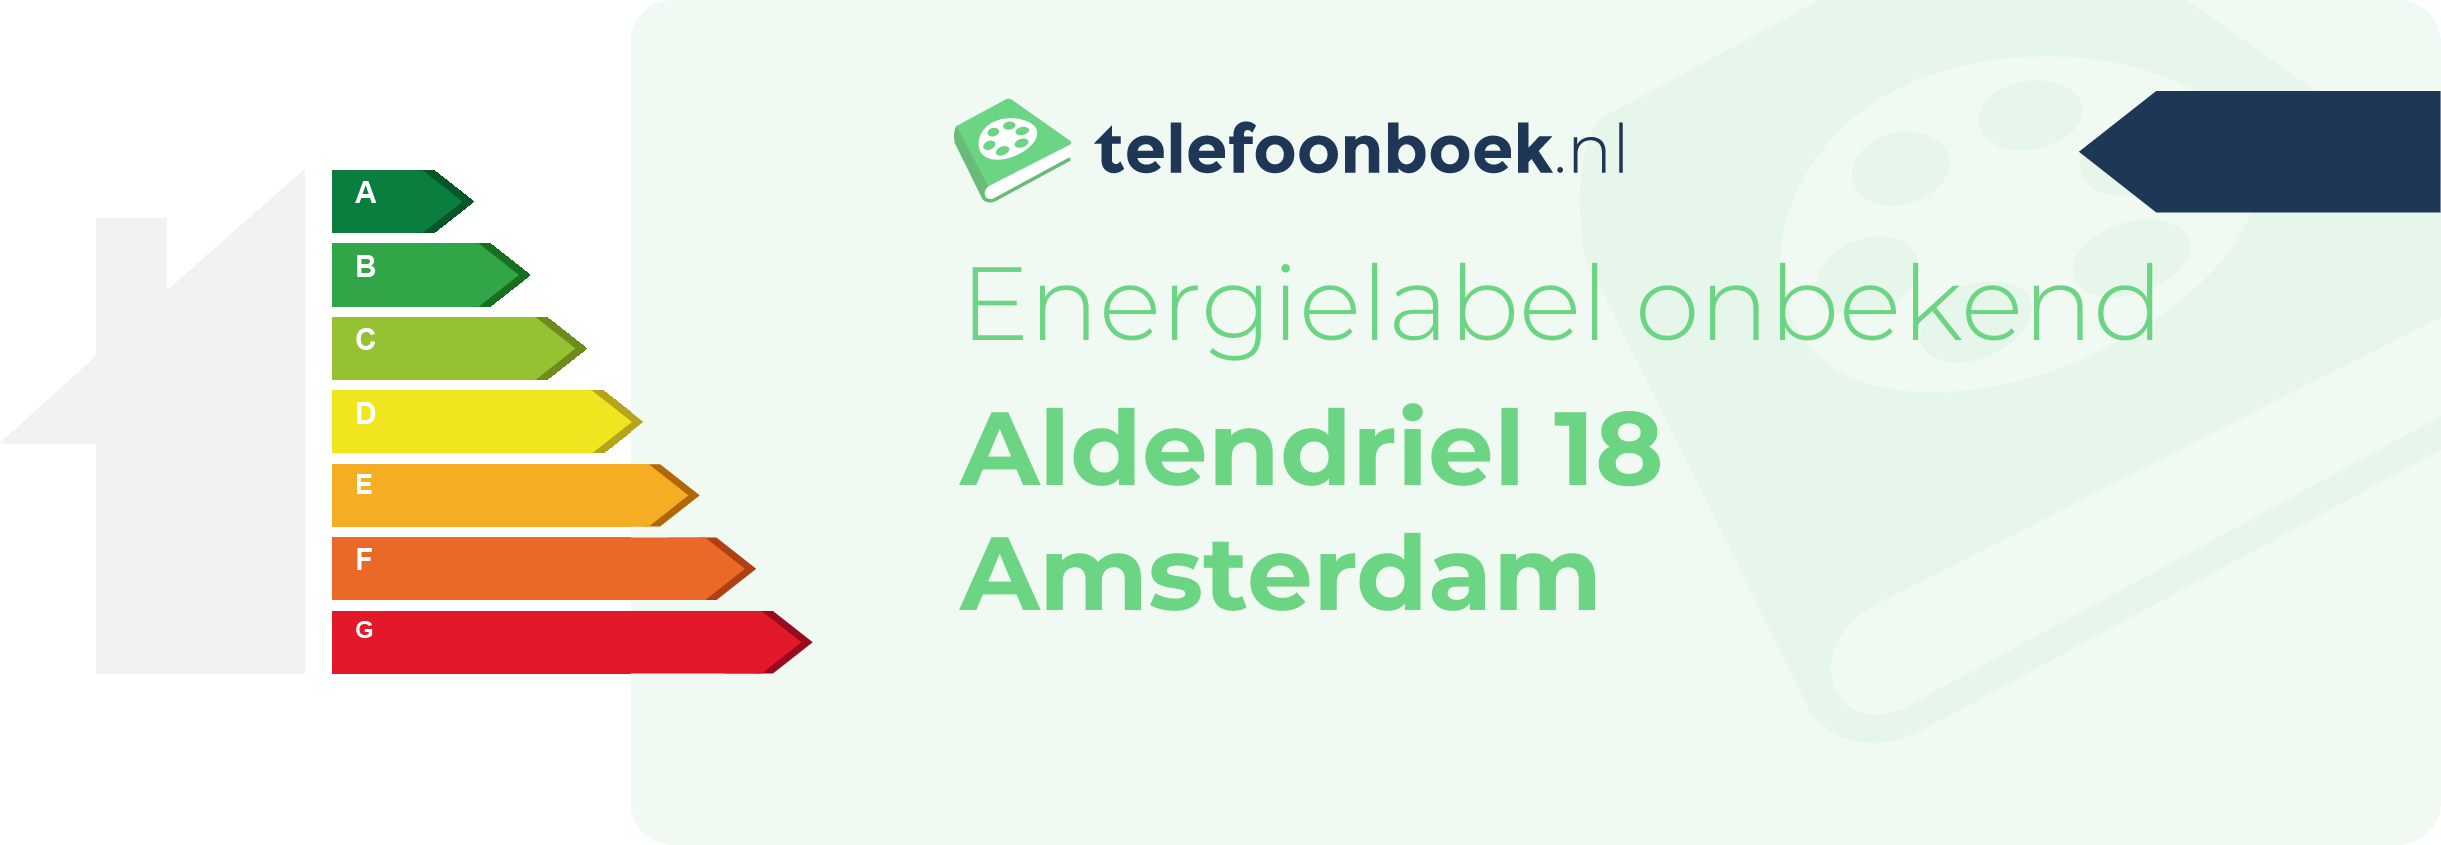 Energielabel Aldendriel 18 Amsterdam